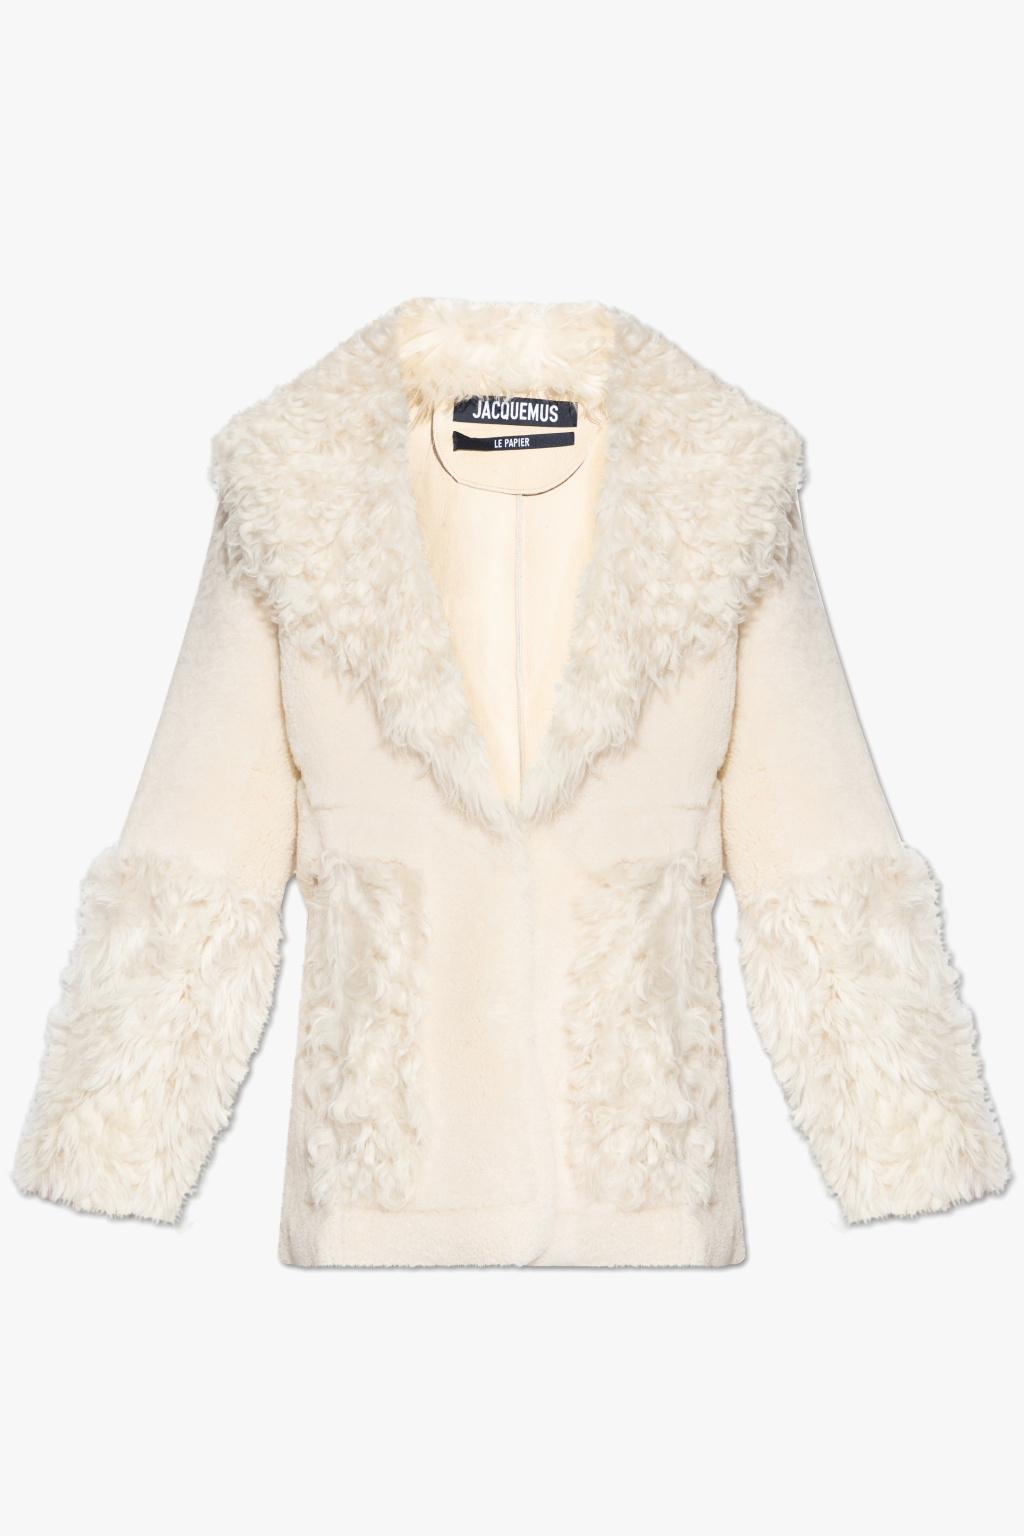 Jacquemus ‘Piobbu’ shearling jacket